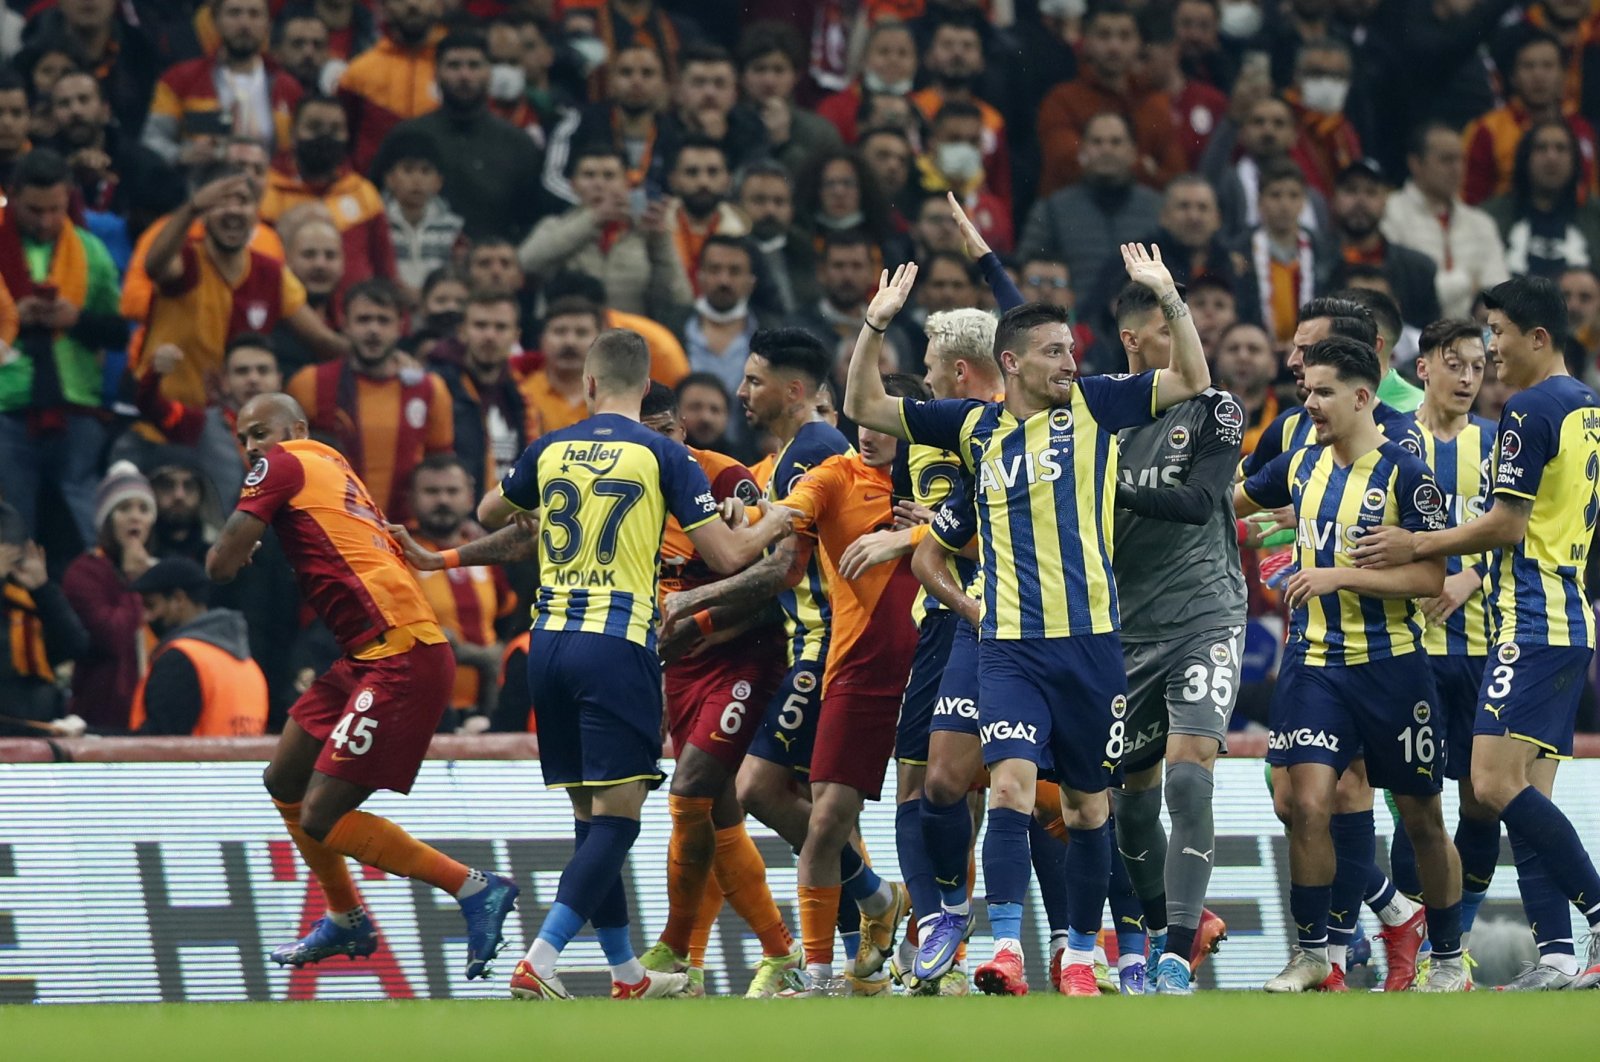 Fenerbahçe and Galatasaray players clash in derby game at Nef Stadyumu, Istanbul, Turkey, Nov. 21, 2021. (Reuters Photo)